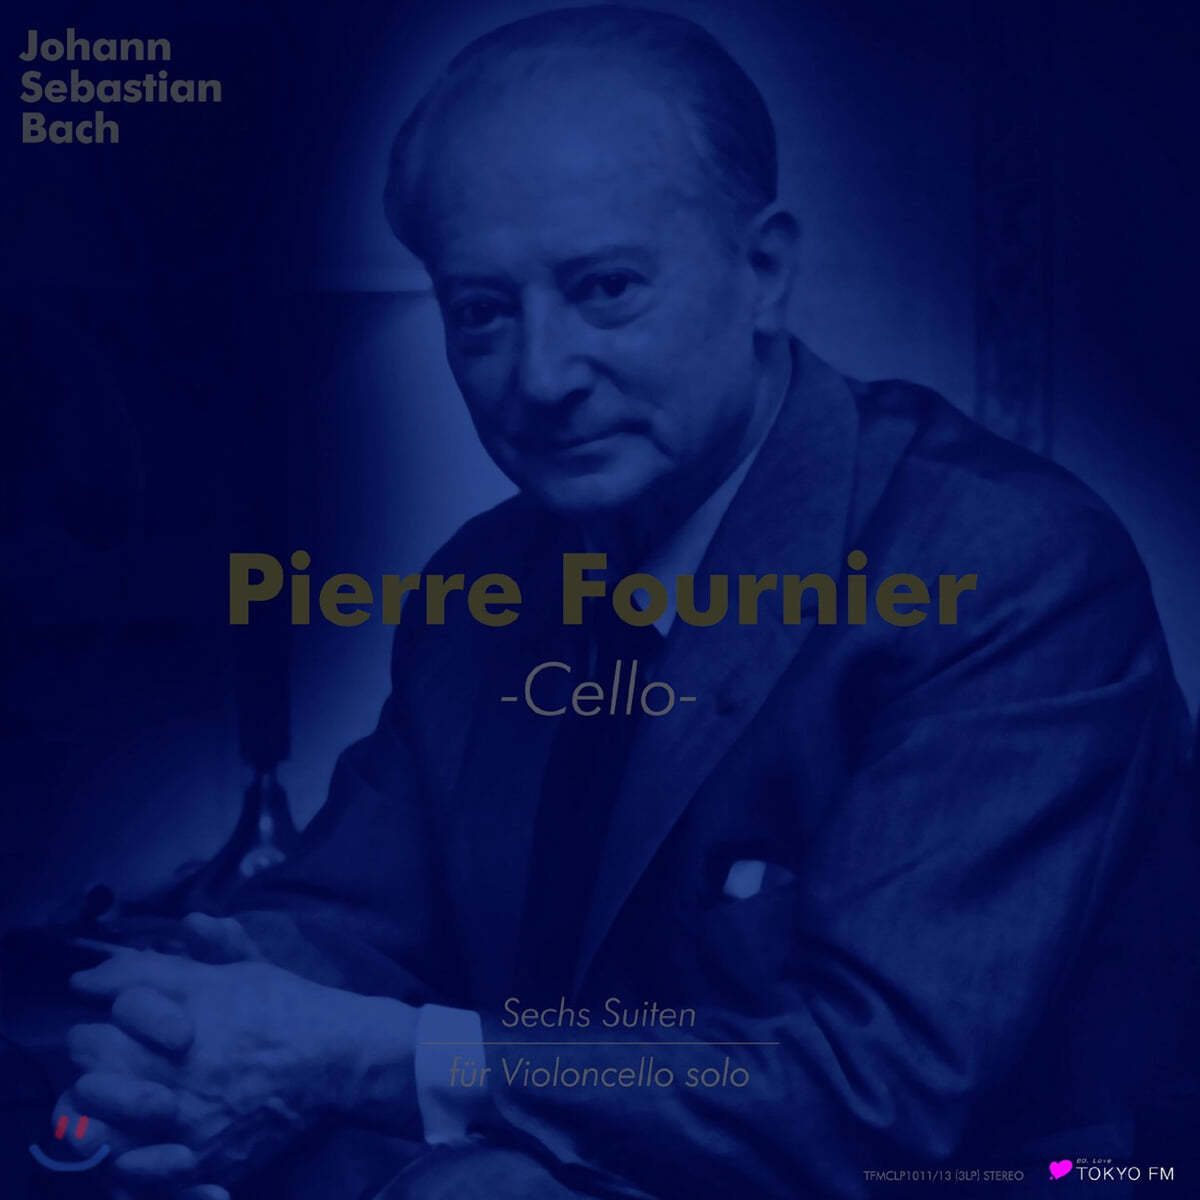 Pierre Fournier 바흐: 무반주 첼로 모음곡 전곡집 - 피에르 푸르니에 (Bach: Complete Cello Suites BWV 1007-1012) [3LP]